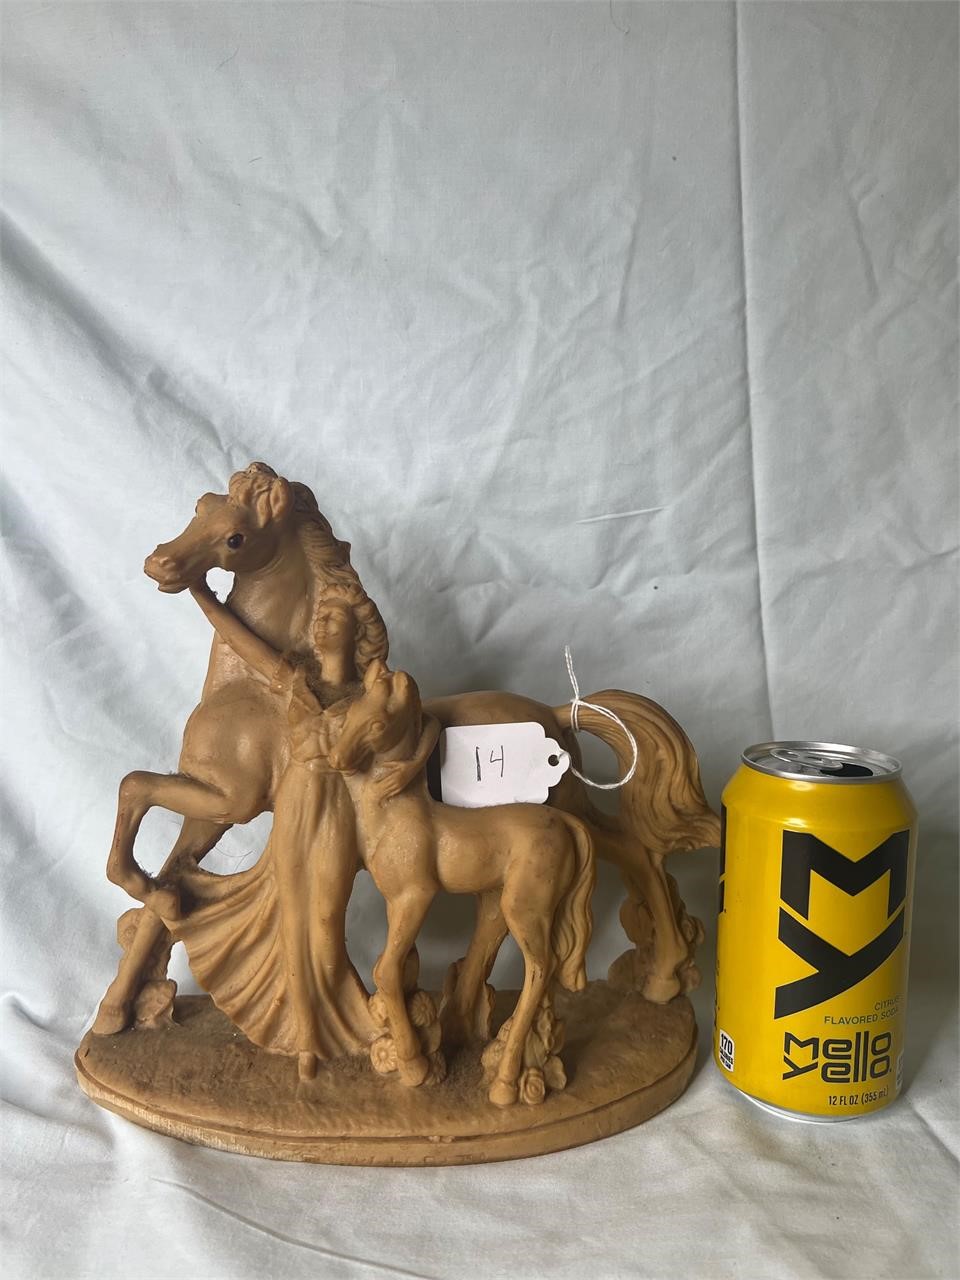 Classic horse statue